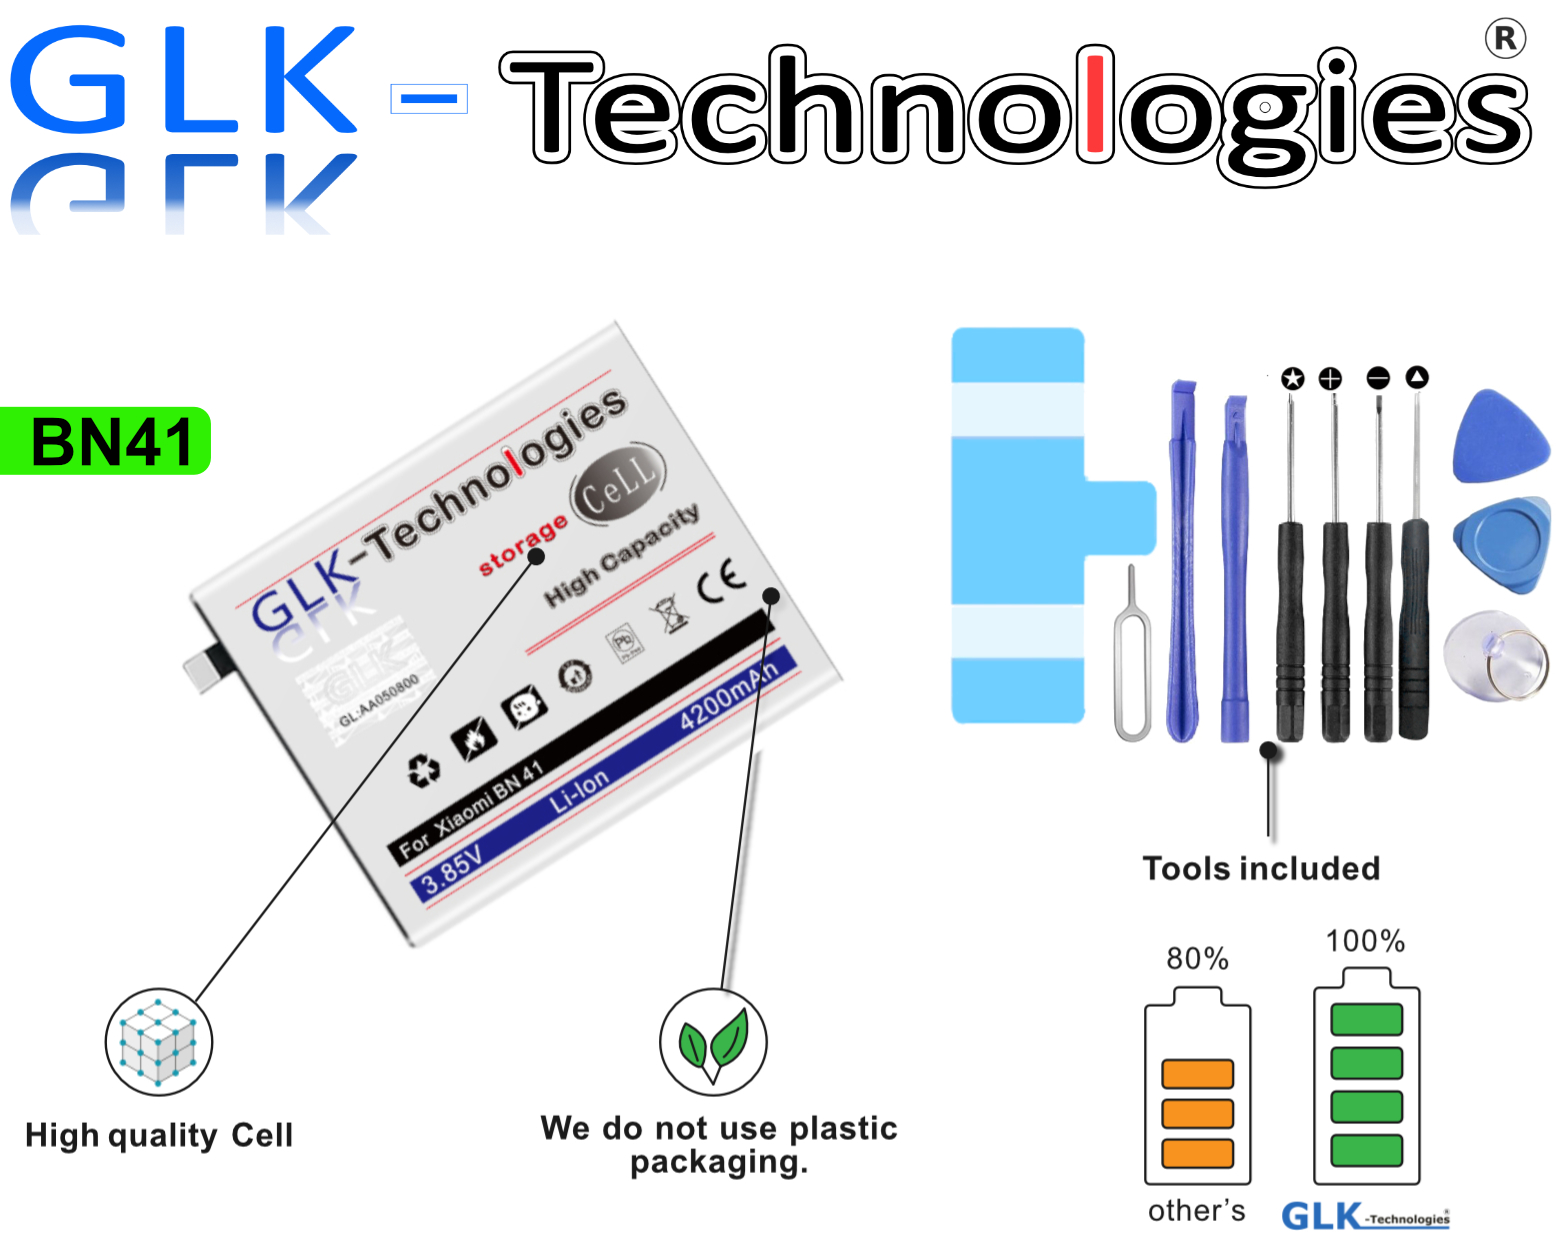 GLK-TECHNOLOGIES High Power Ersatz Akku inkl. Werkzeug Redmi 4 Smartphone Akku Xiaomi mAh Battery 4280 Li-Ion Ersatz für BN41 Note